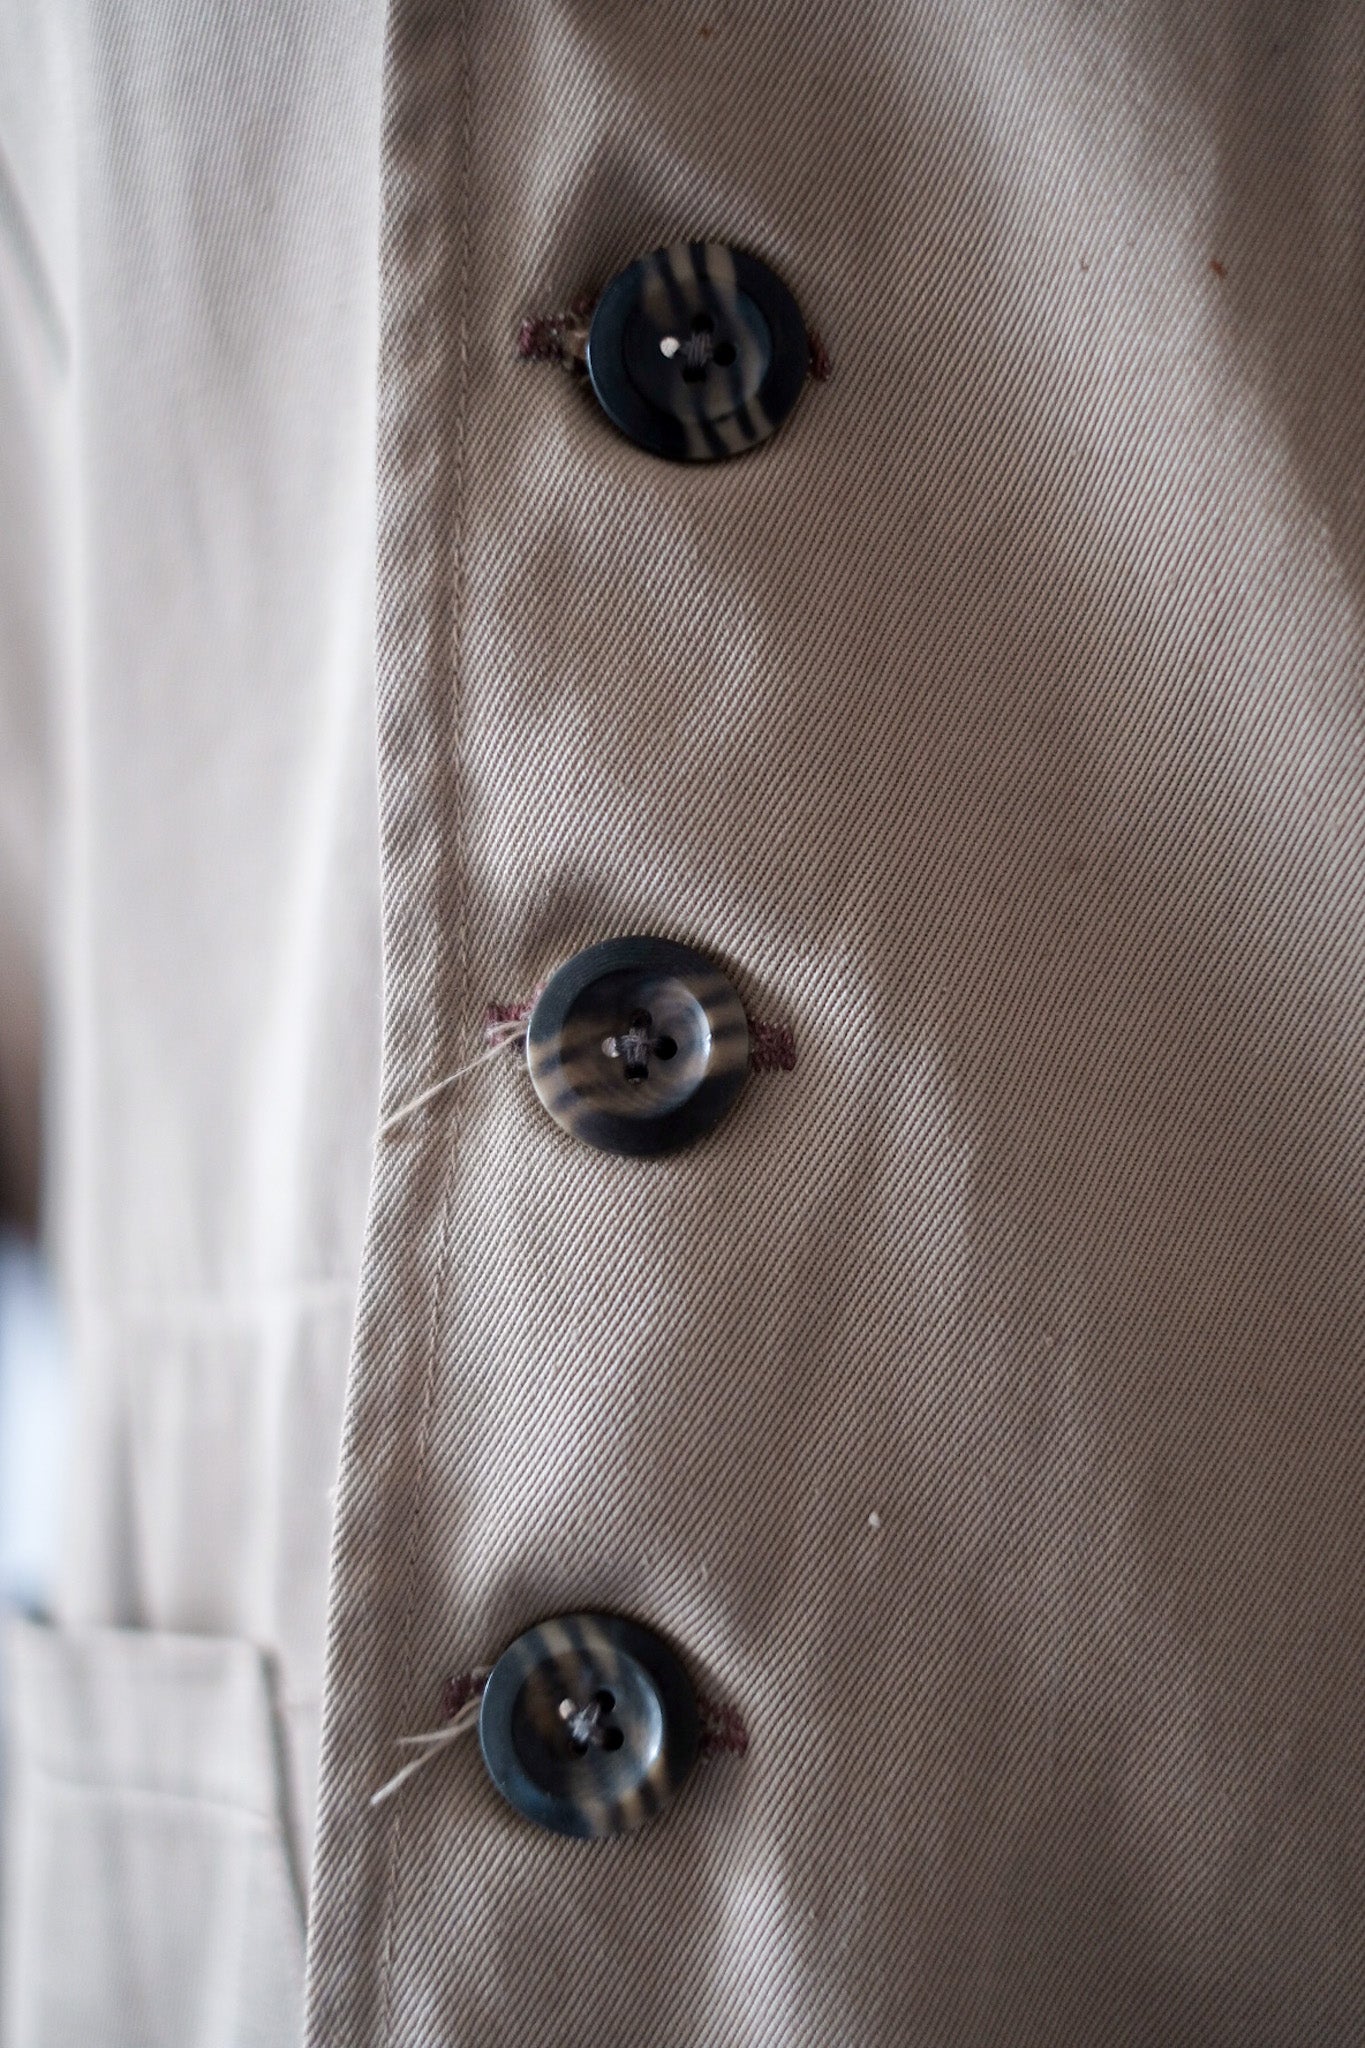 [~ 40's] French Vintage Cotton Lapel Work Jacket